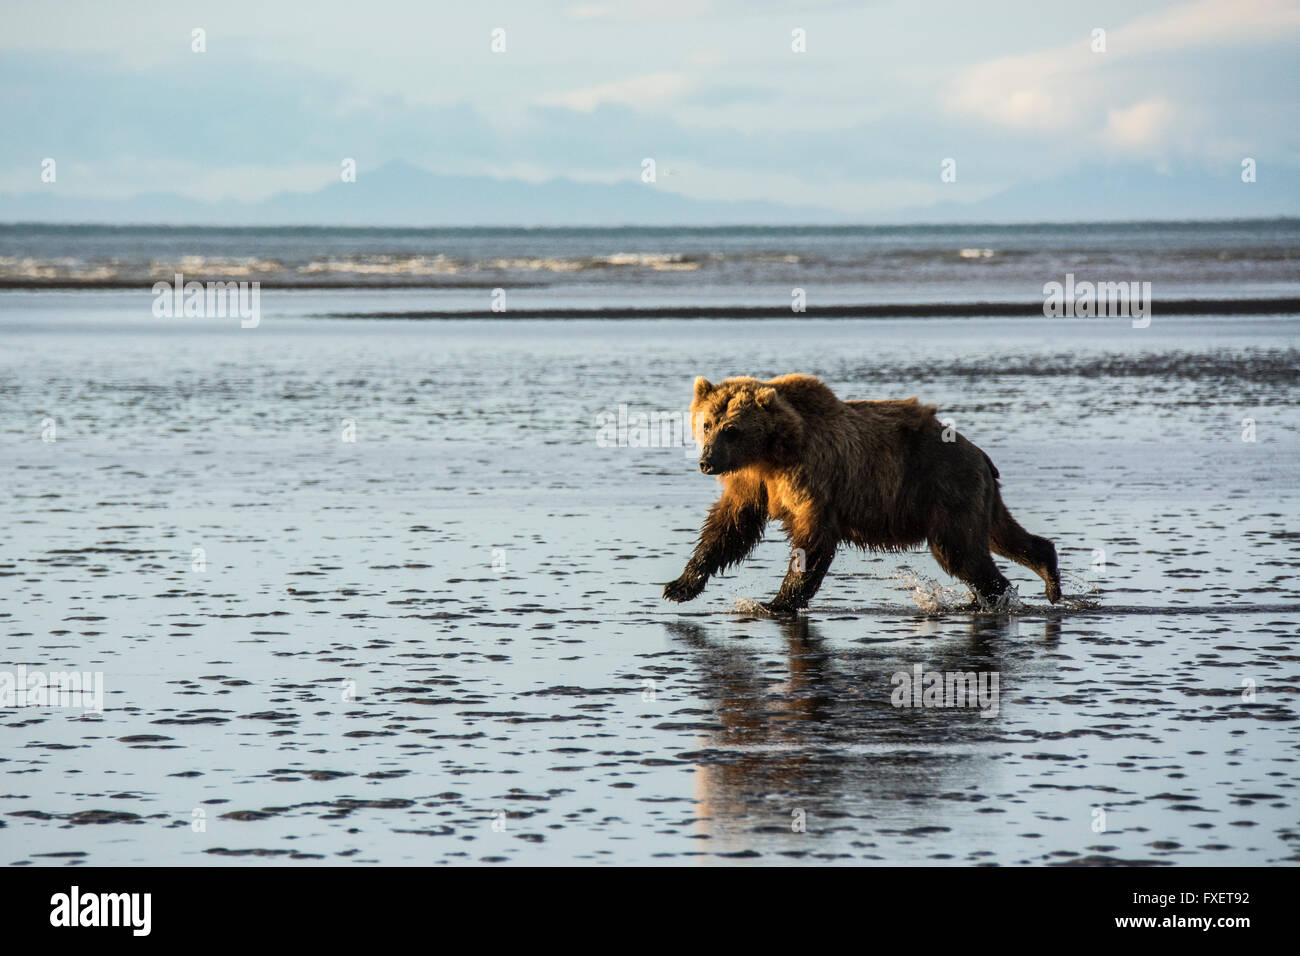 Adult Wild Grizzly Bear, Ursus arctos, running across the tidal flats of the Cook Inlet, Alaska, USA Stock Photo